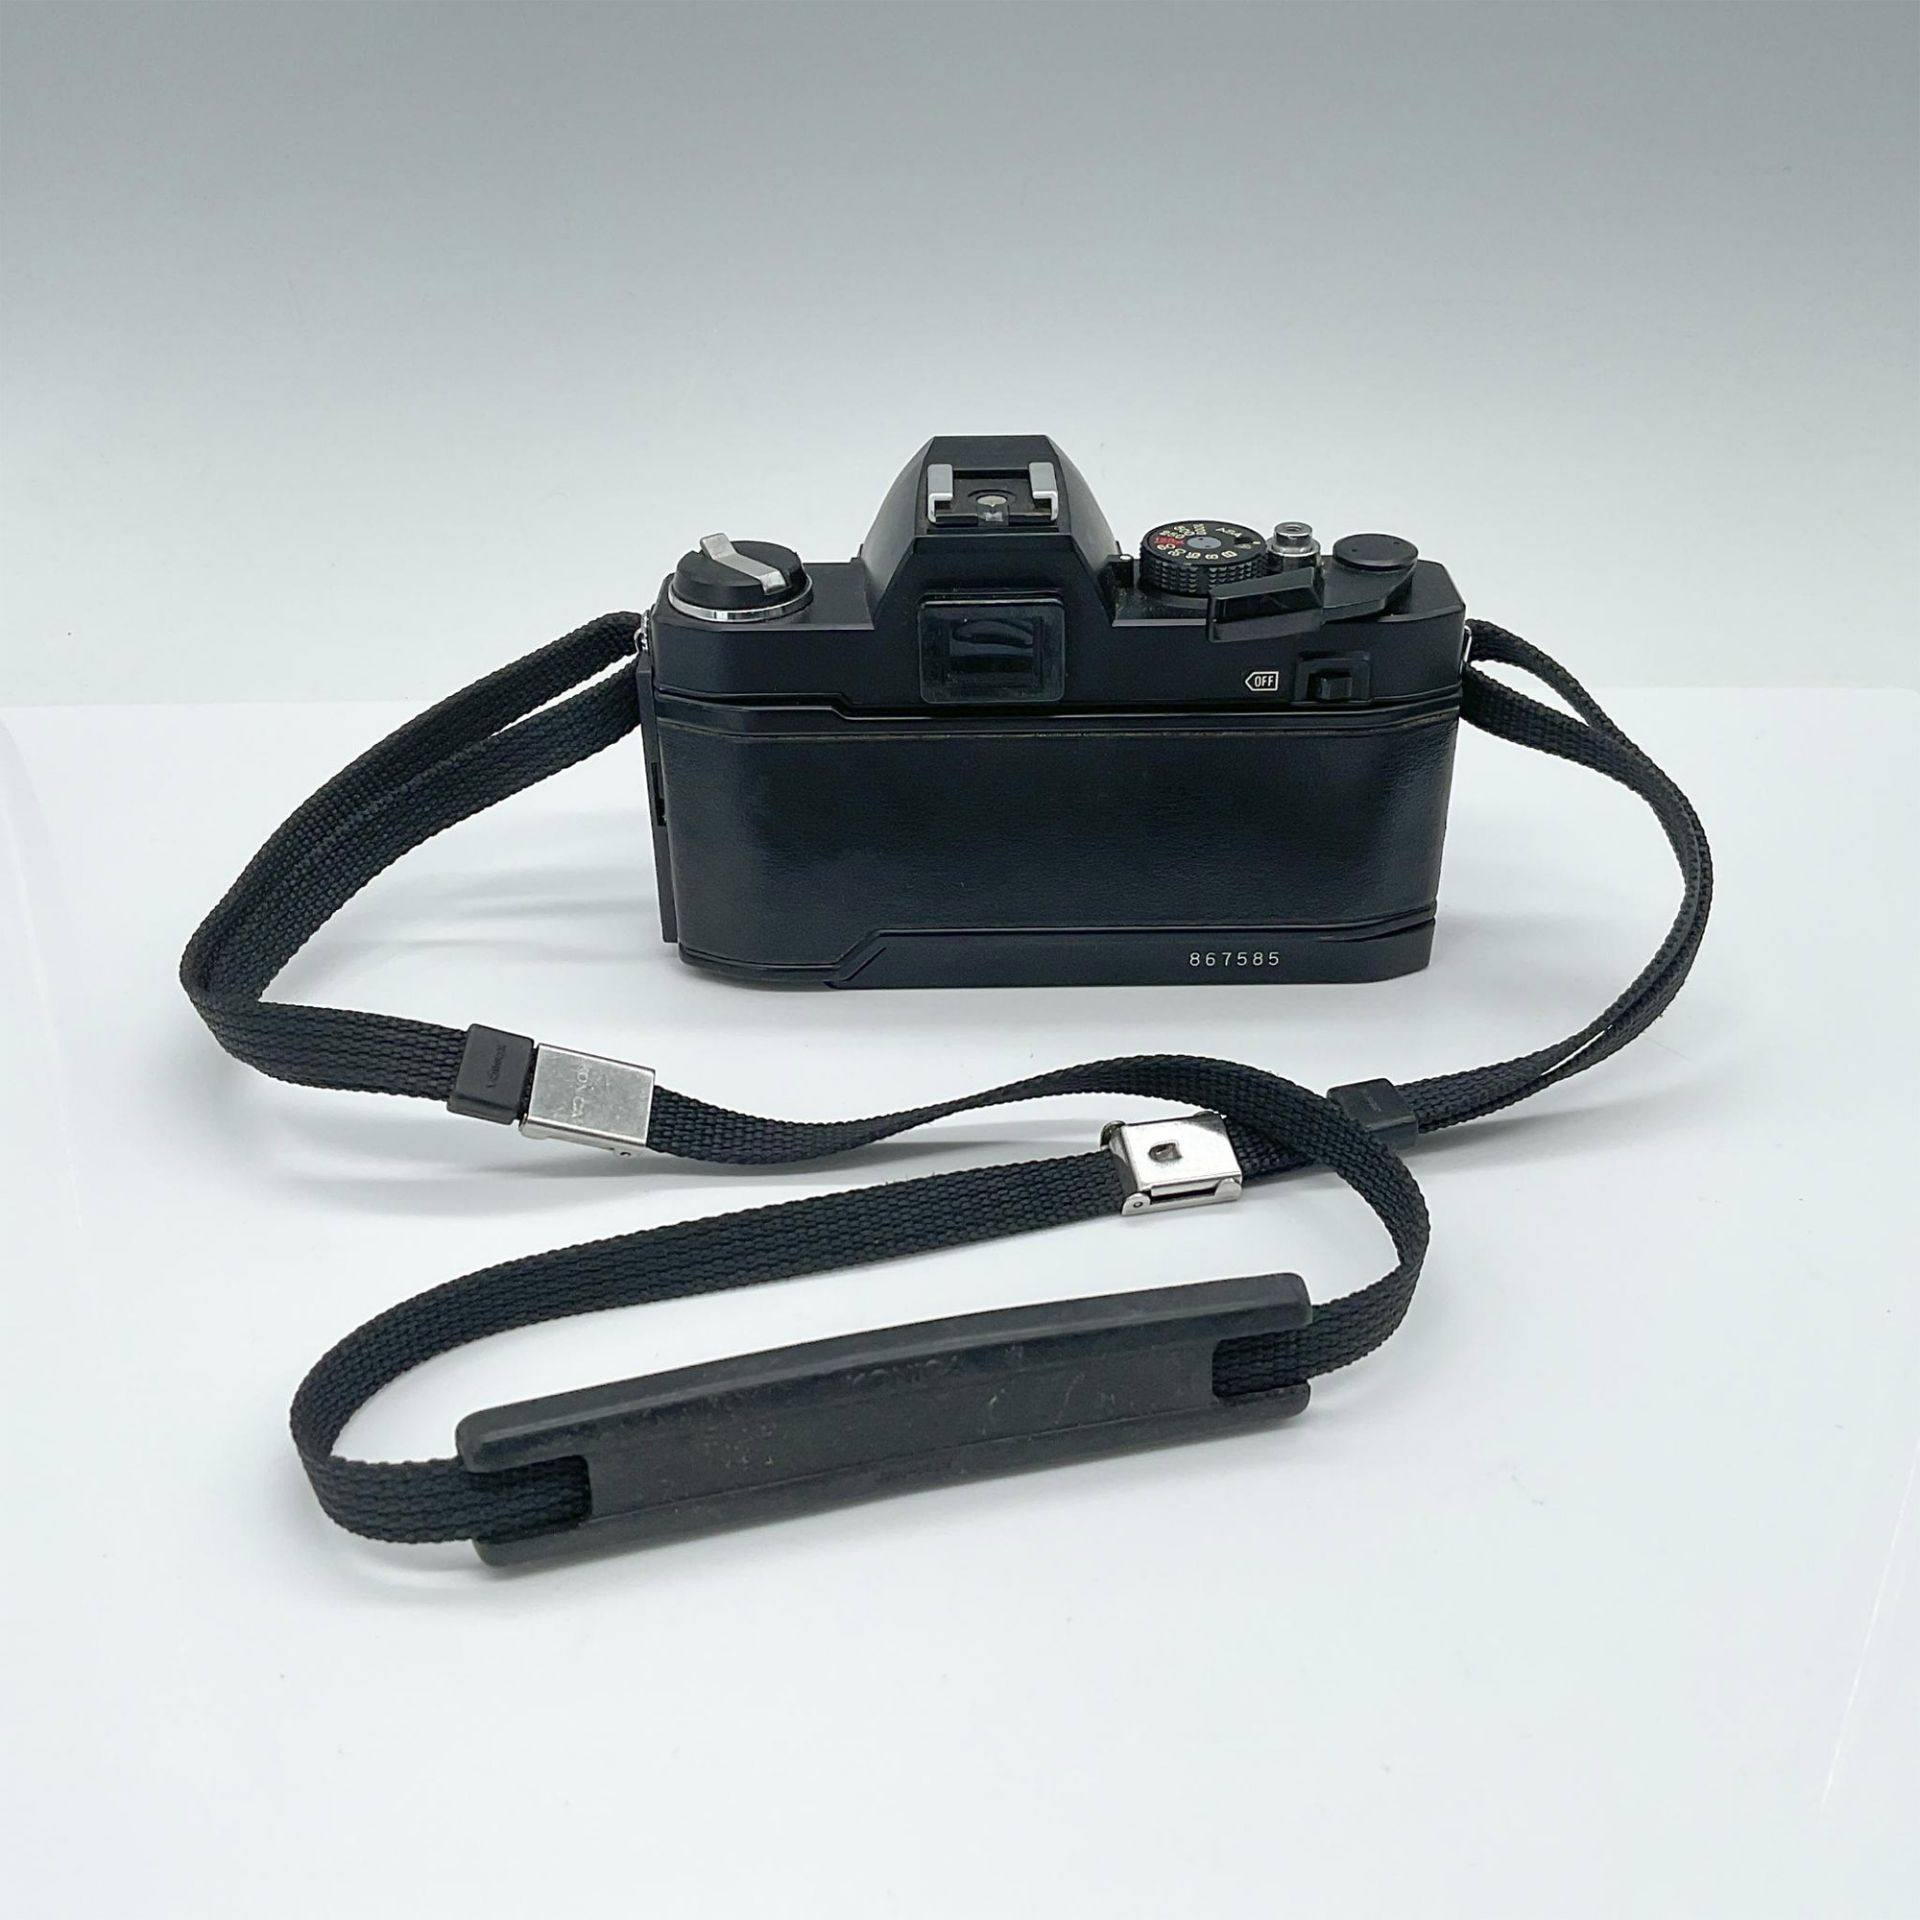 Konica Autoreflex TC 35mm SLR Camera, Body Only - Image 2 of 5